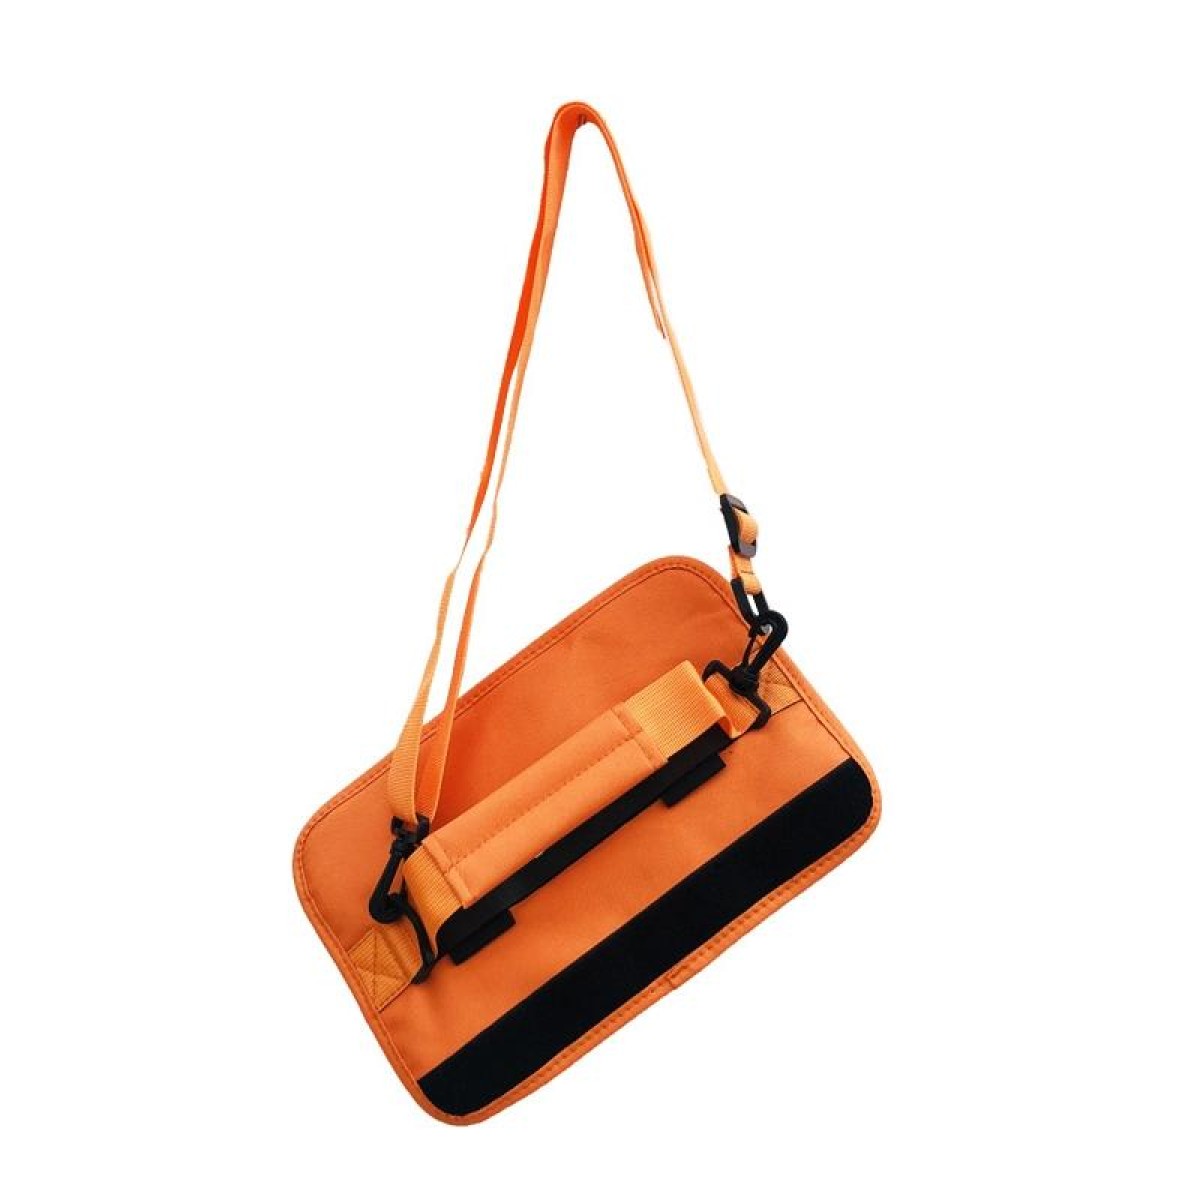 SL-001 Golf Bag Portable Cue HandBag(Yellow)